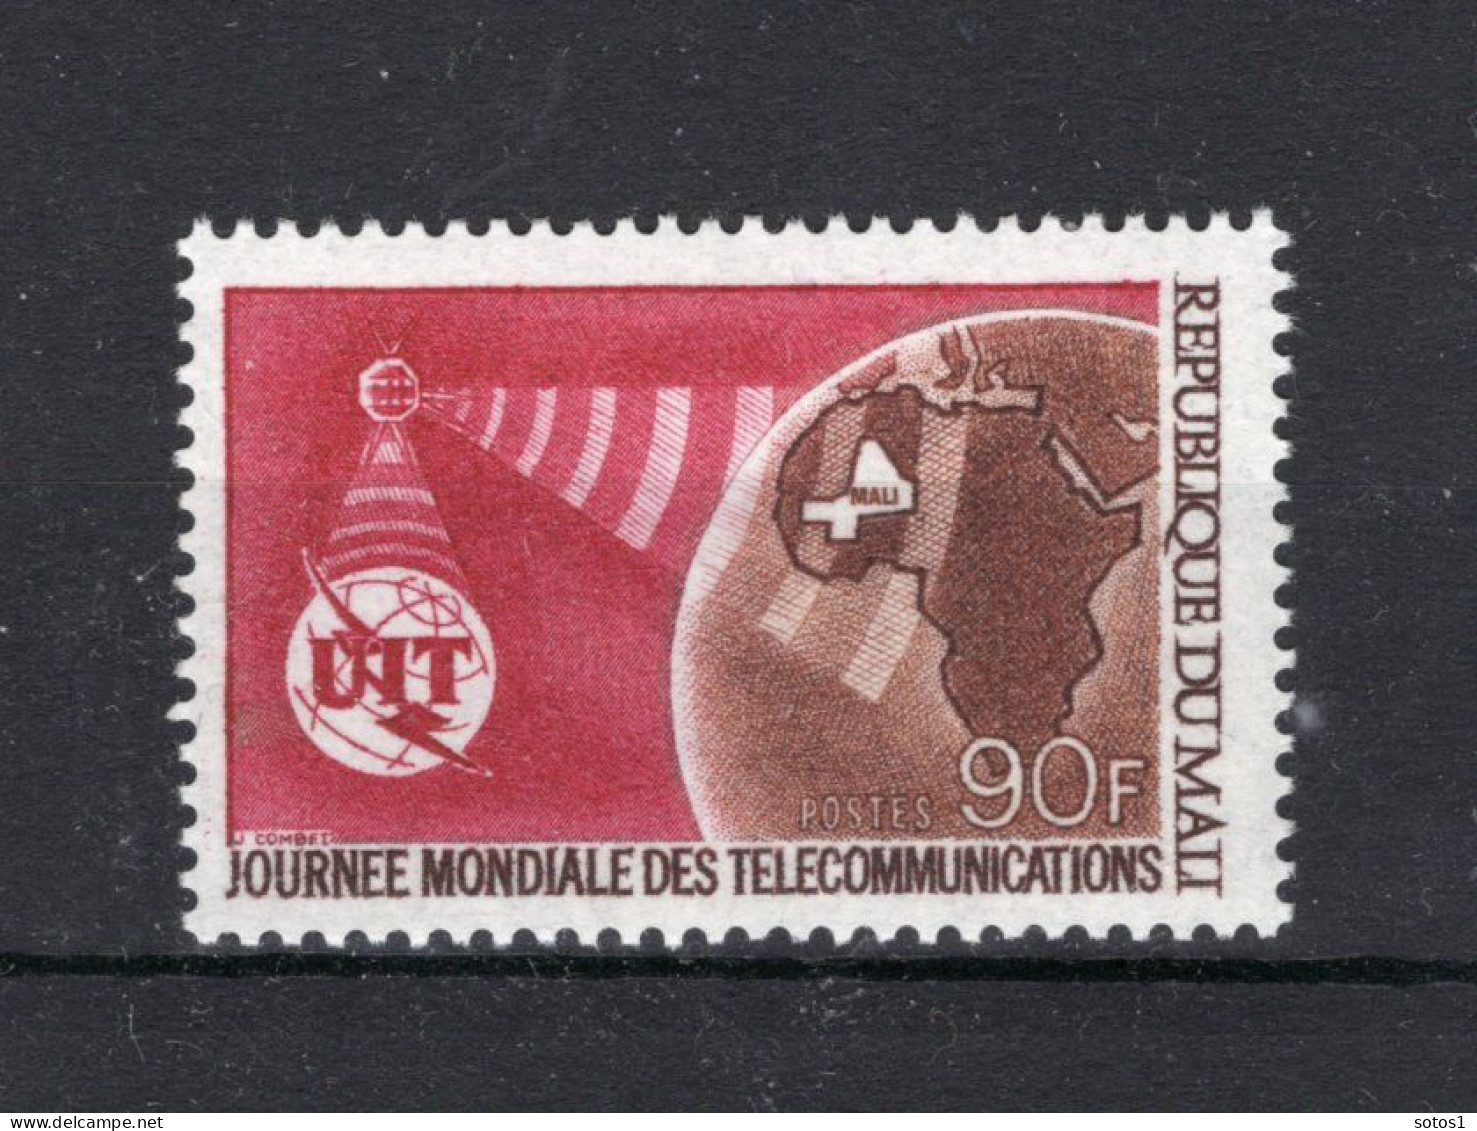 MALI Yt. 137 MH 1970 - Mali (1959-...)